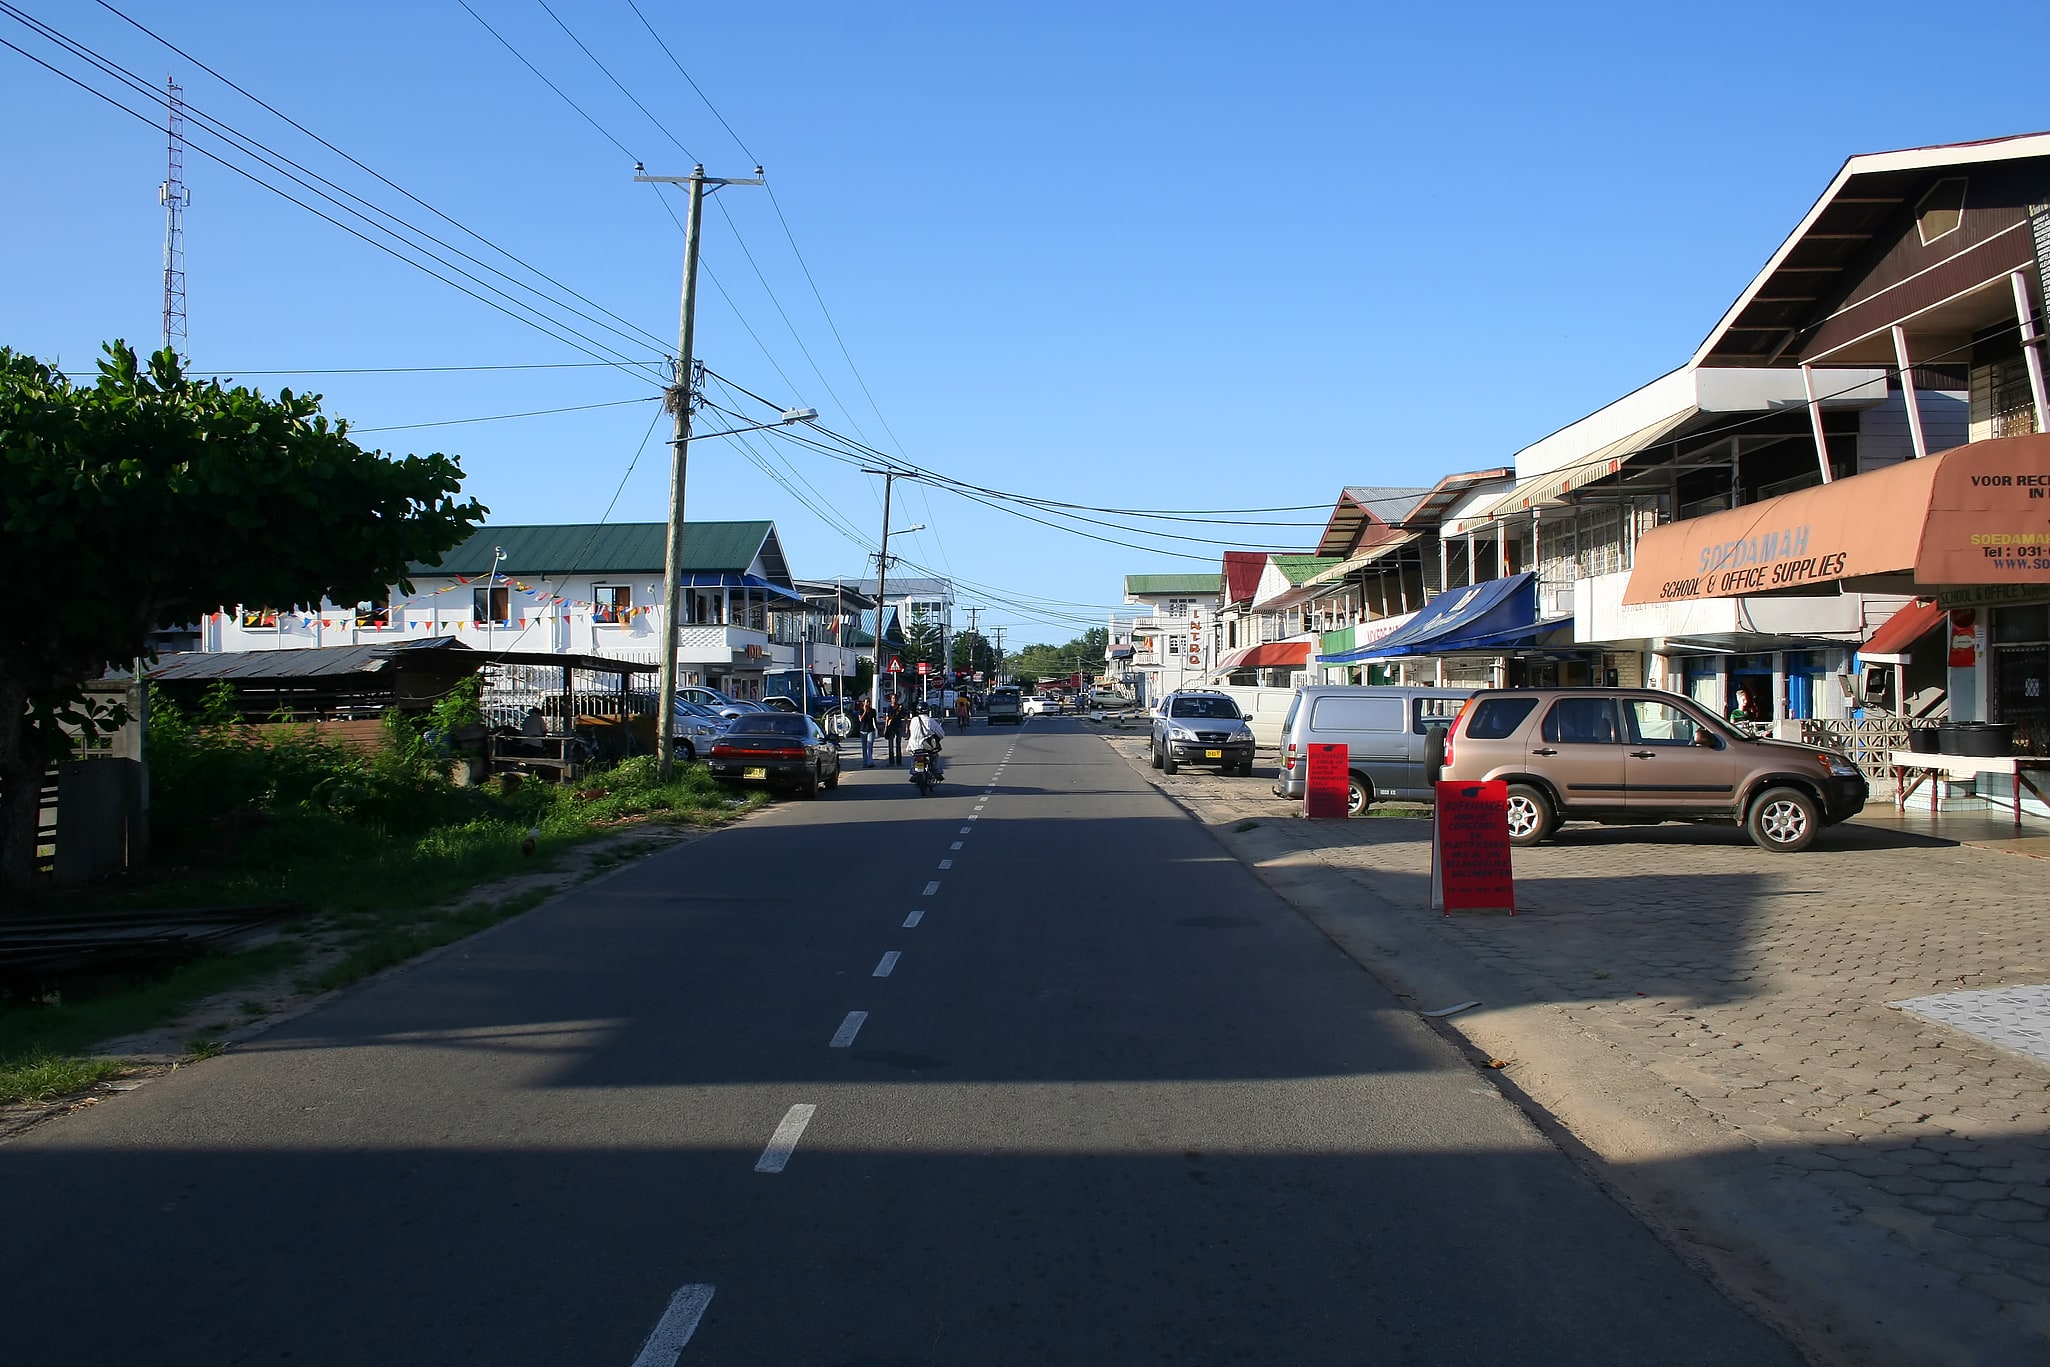 Nieuw Nickerie, Surinam